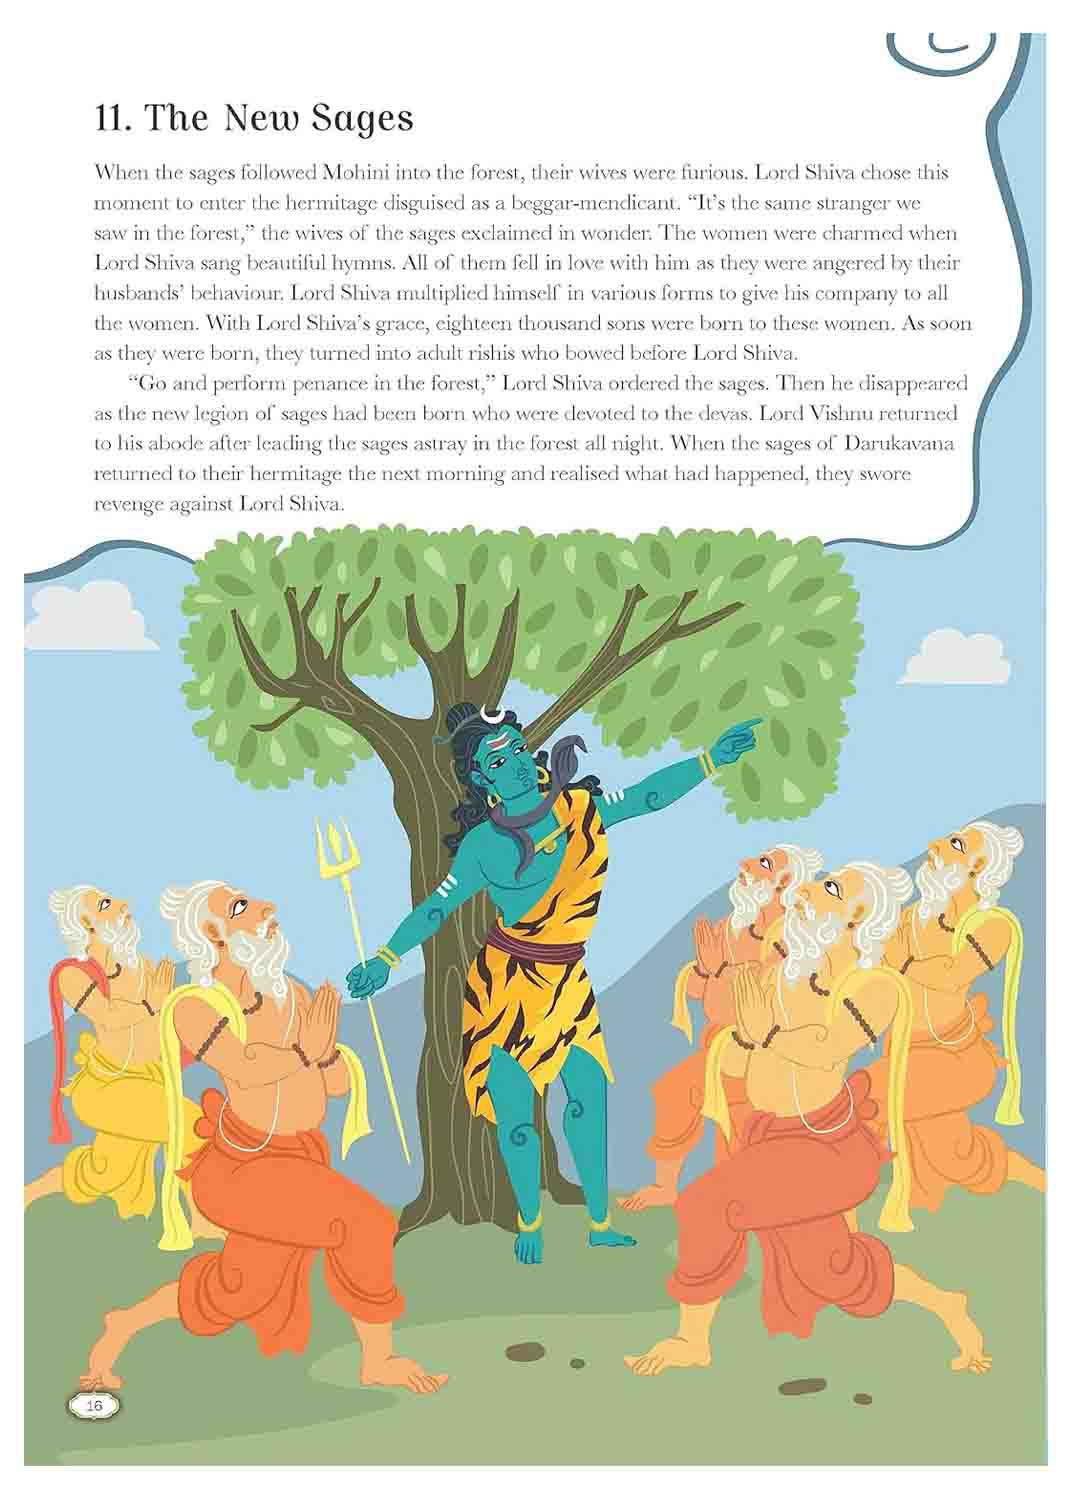 Om Books International 365 Tales of Shiva - 9789352767229